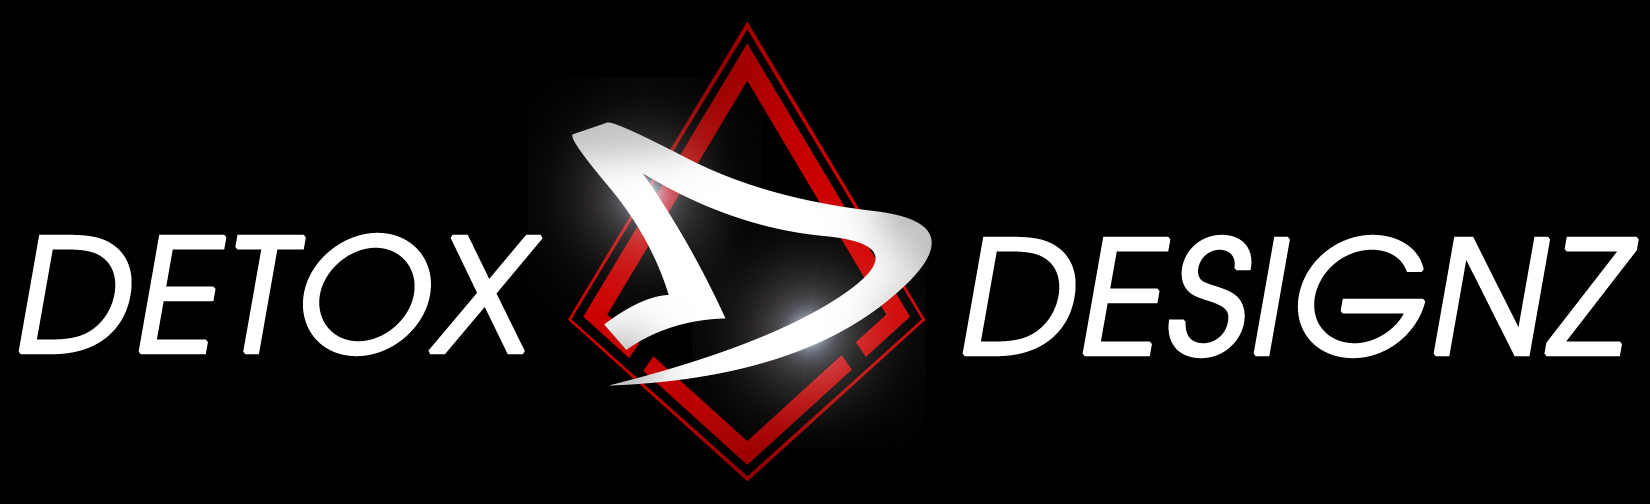 detox-logo